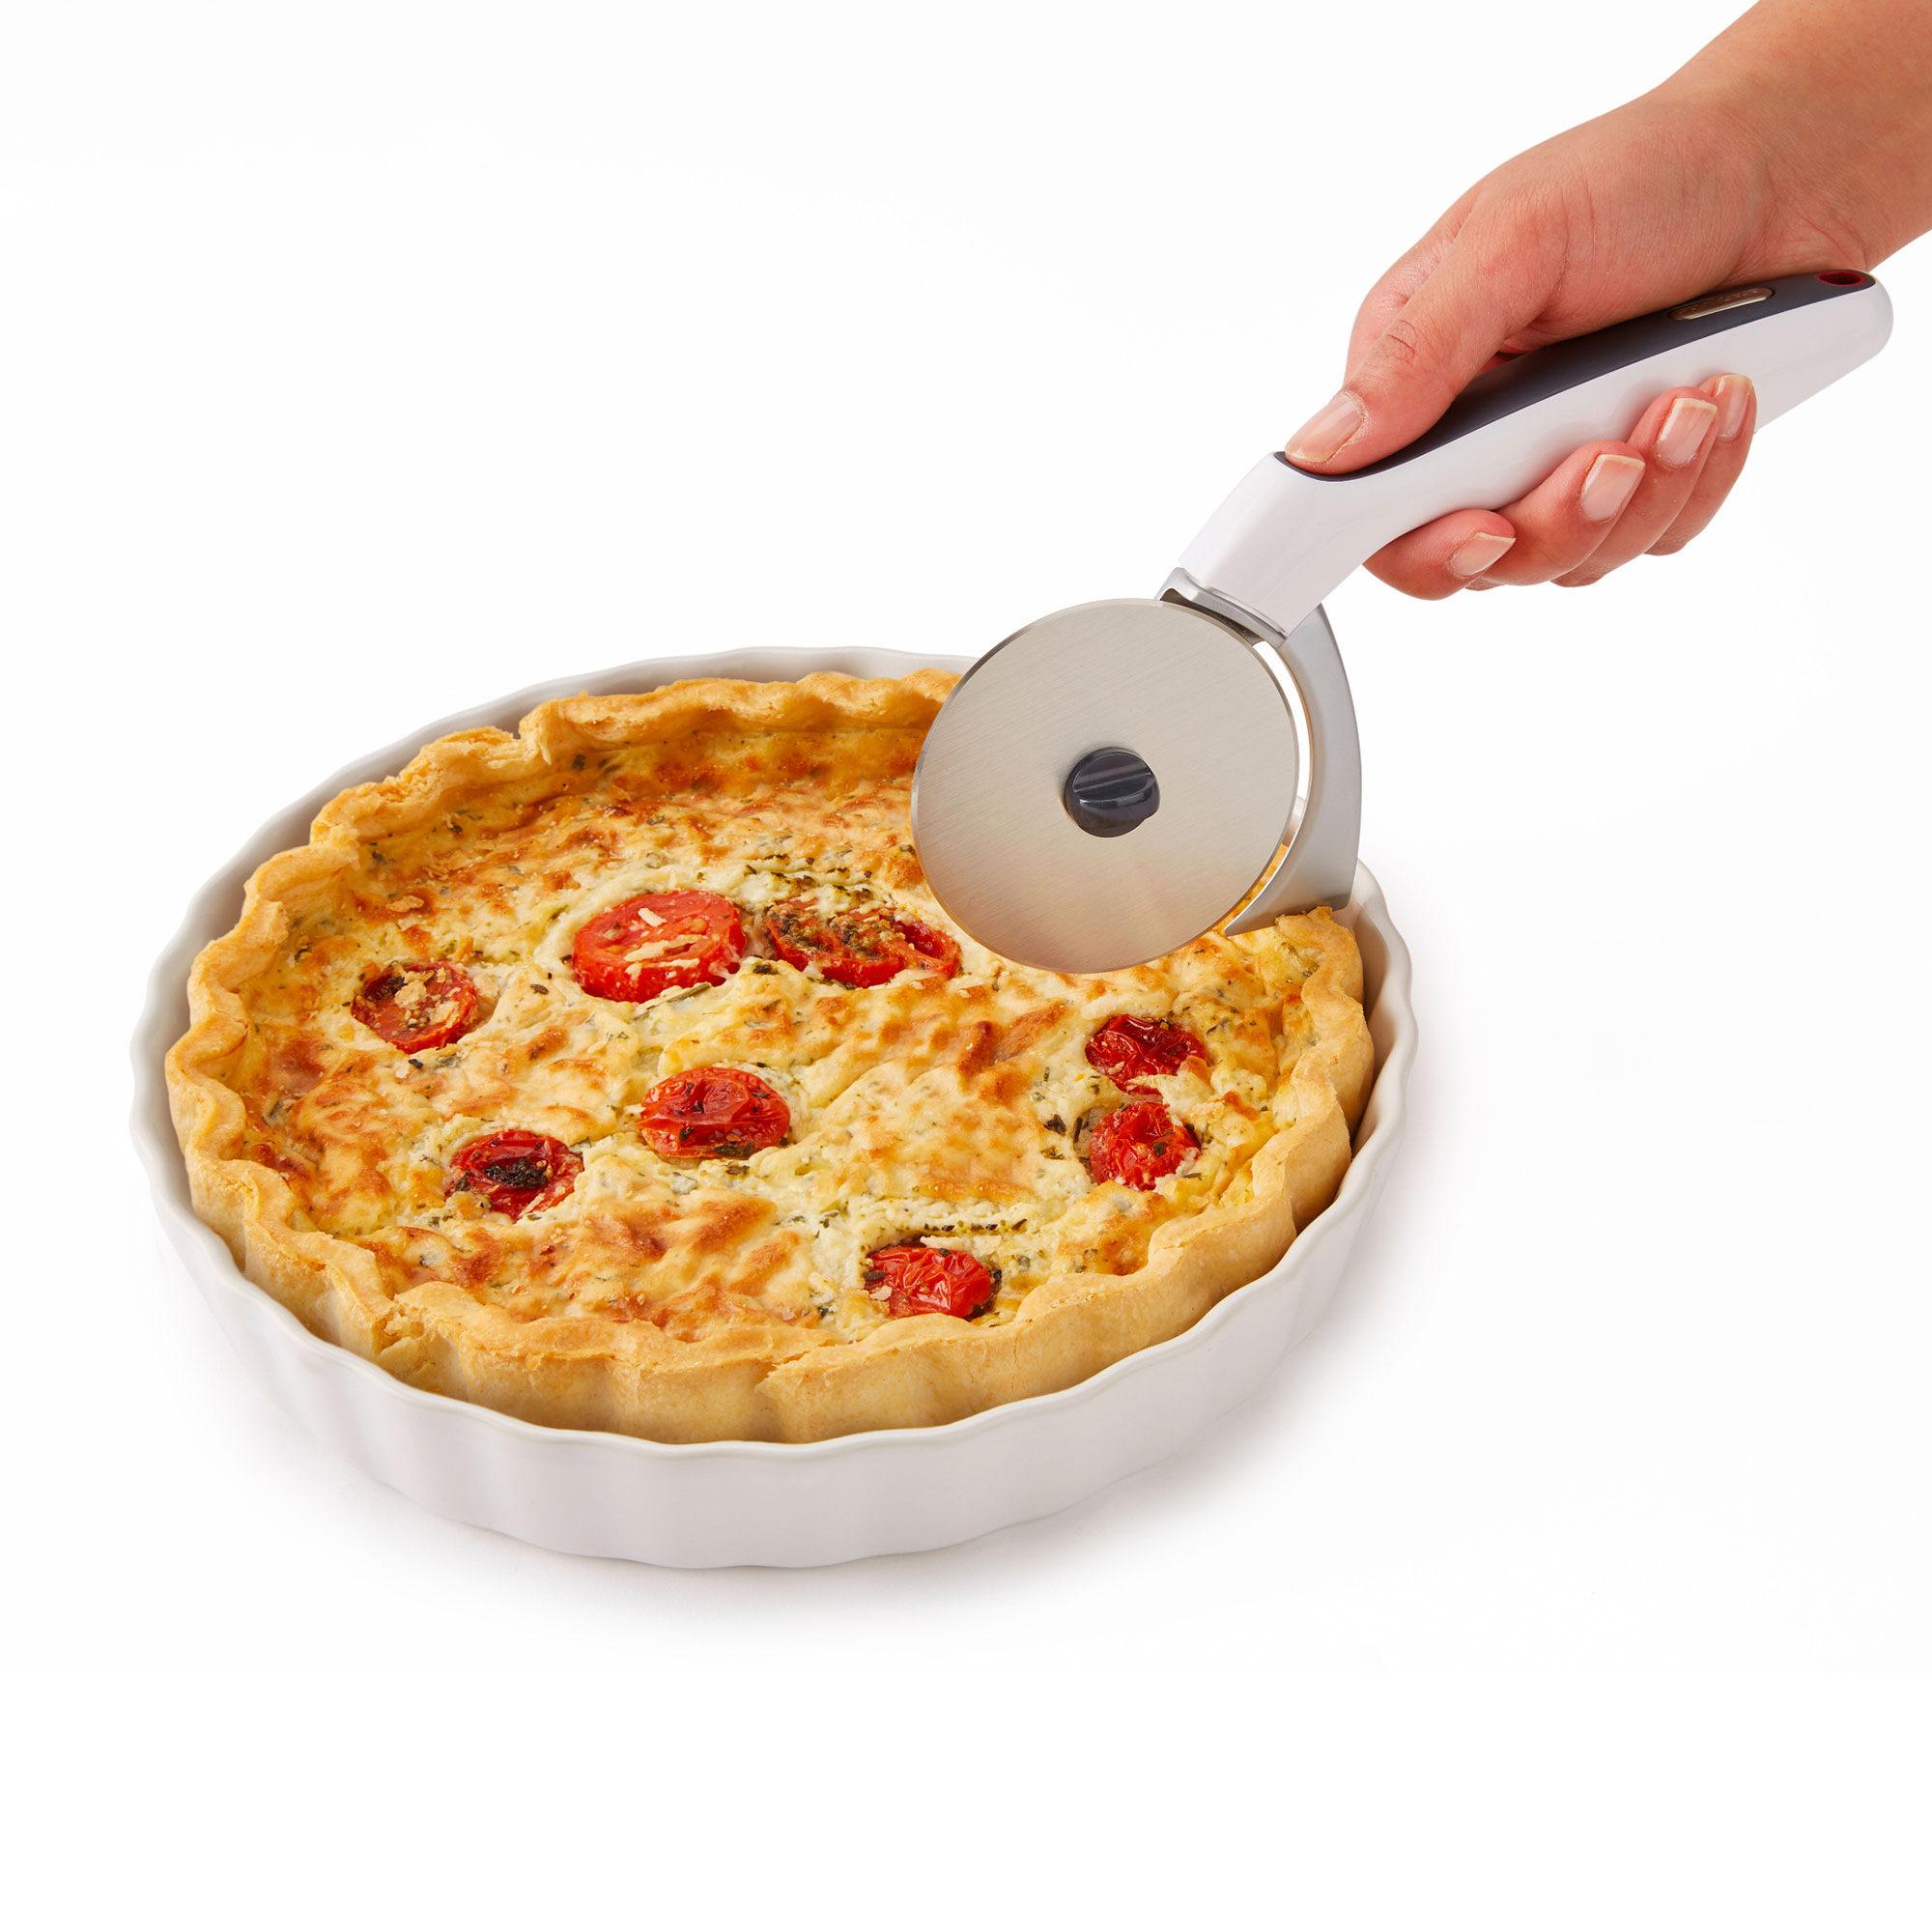 Zyliss Sharp Edge Pizza Cutter Image 3